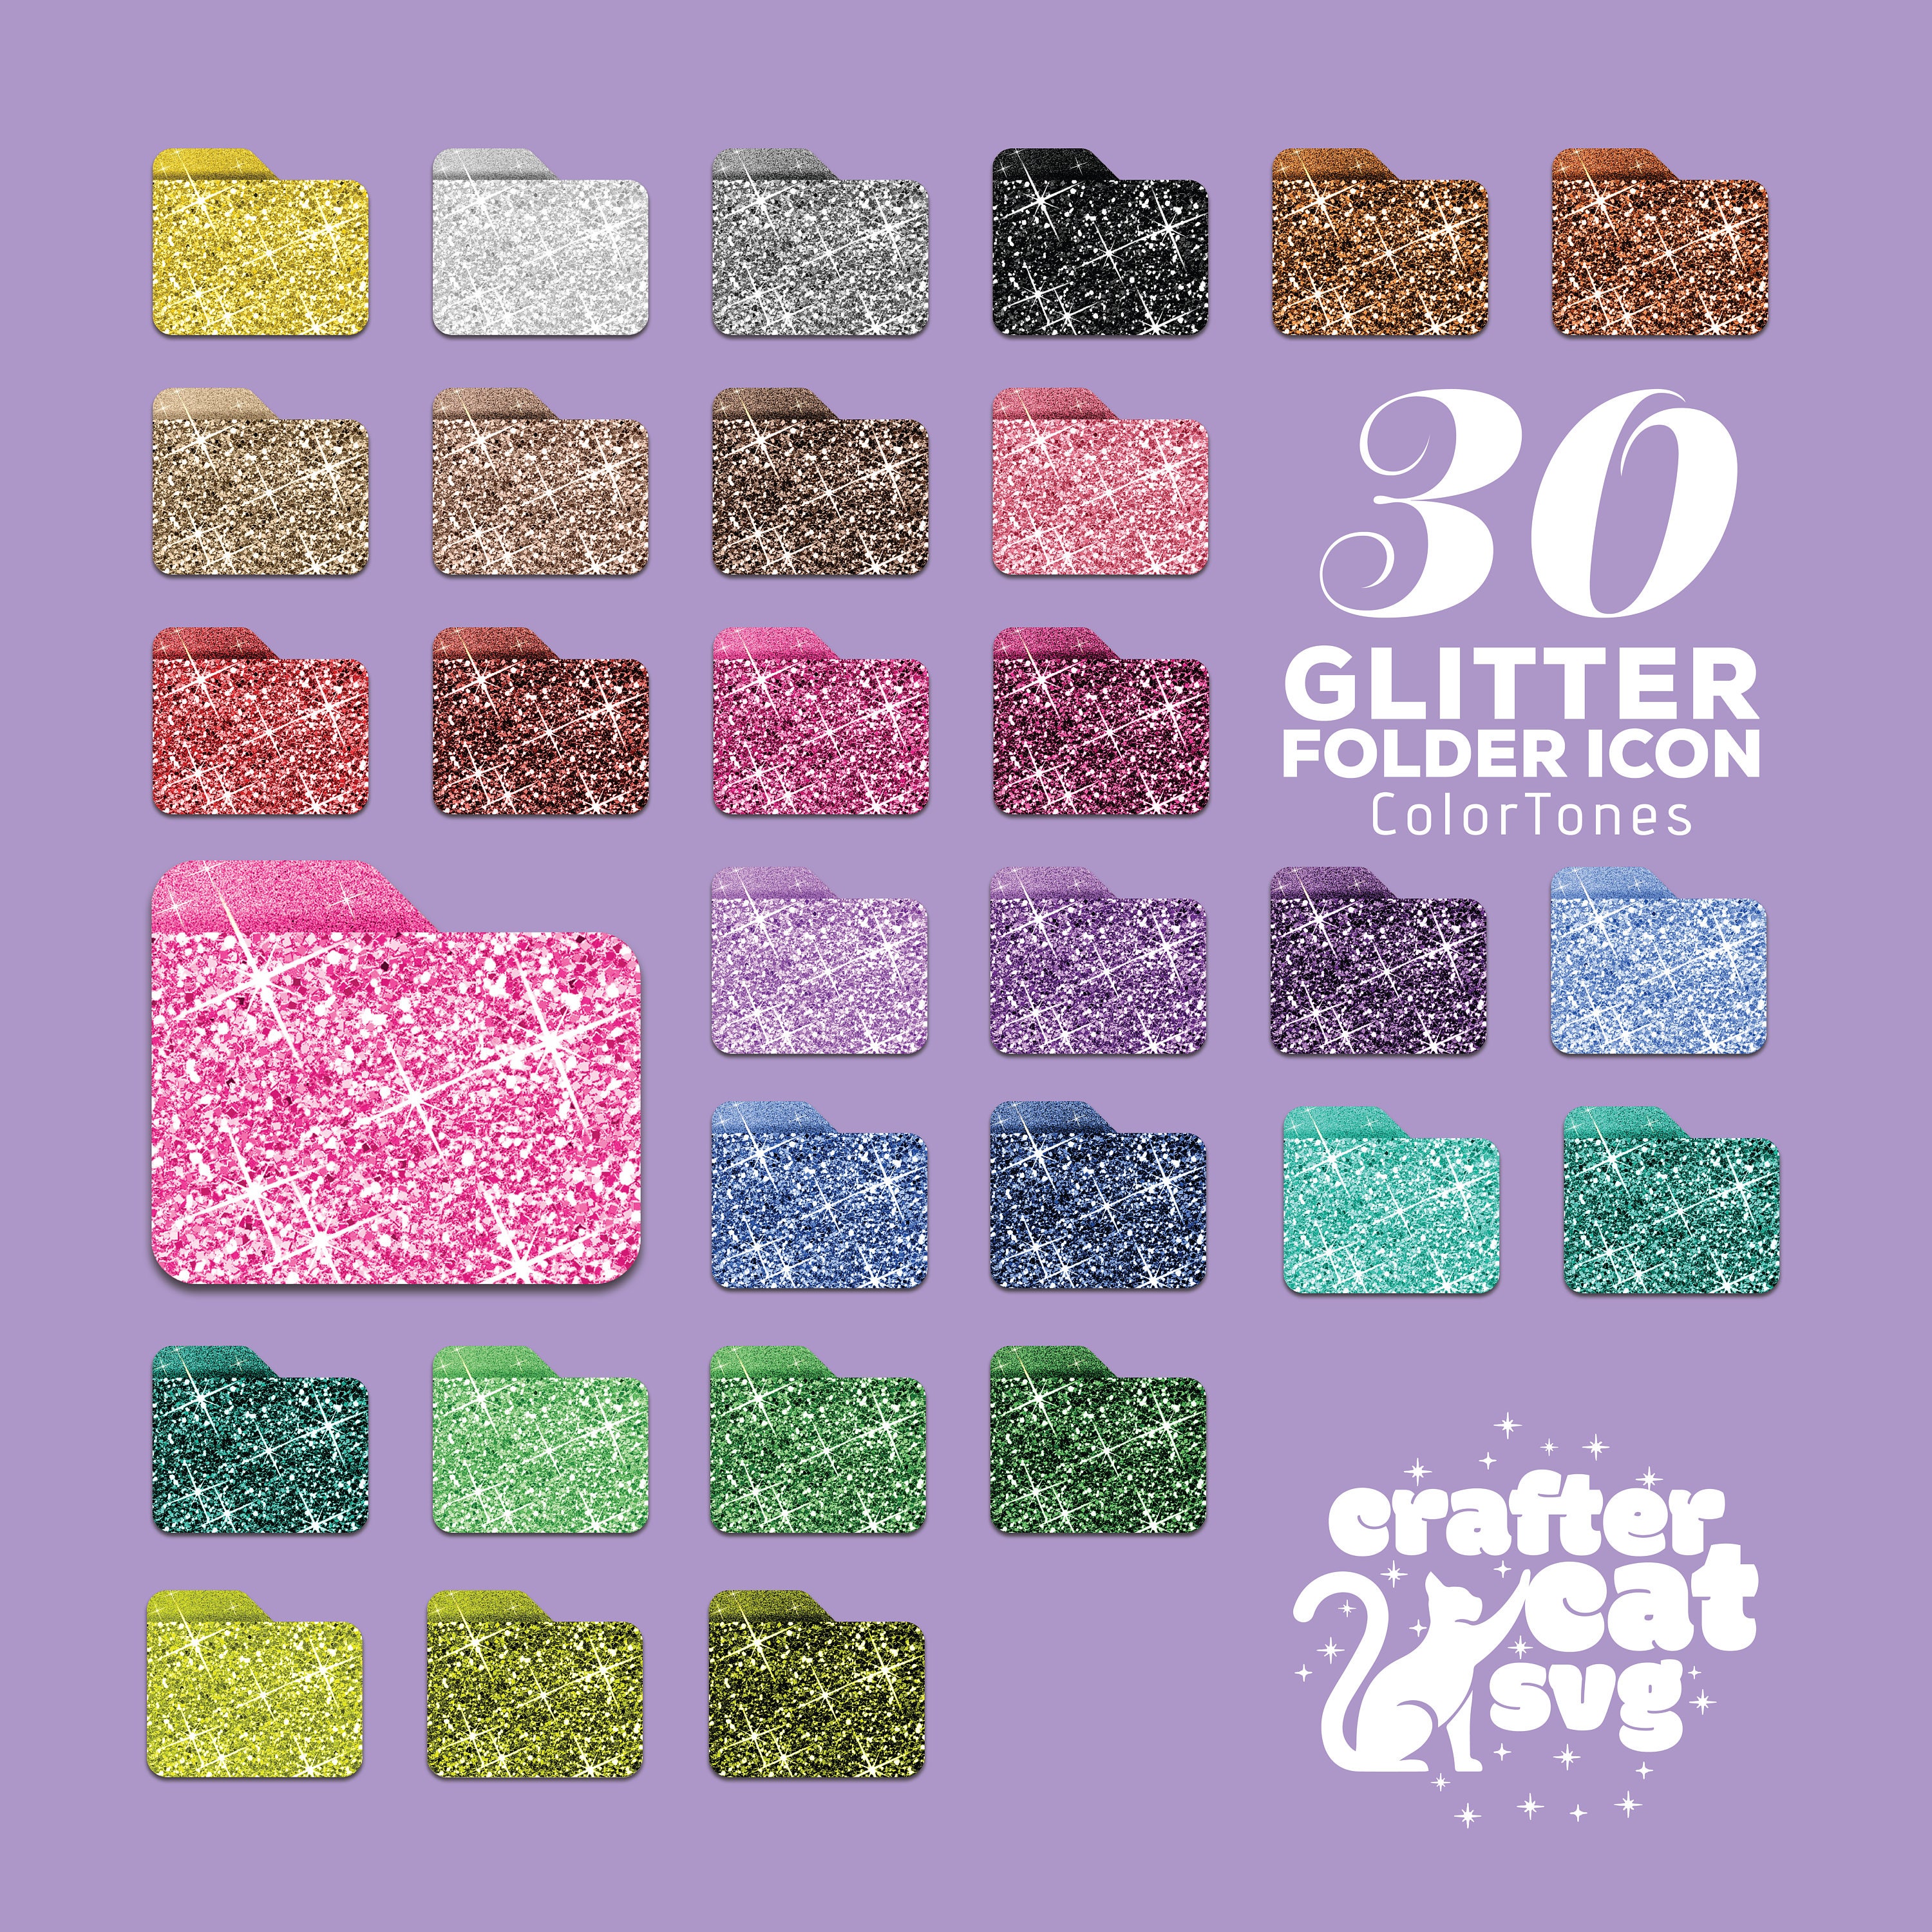 Glitter Folder Icons - Etsy UK